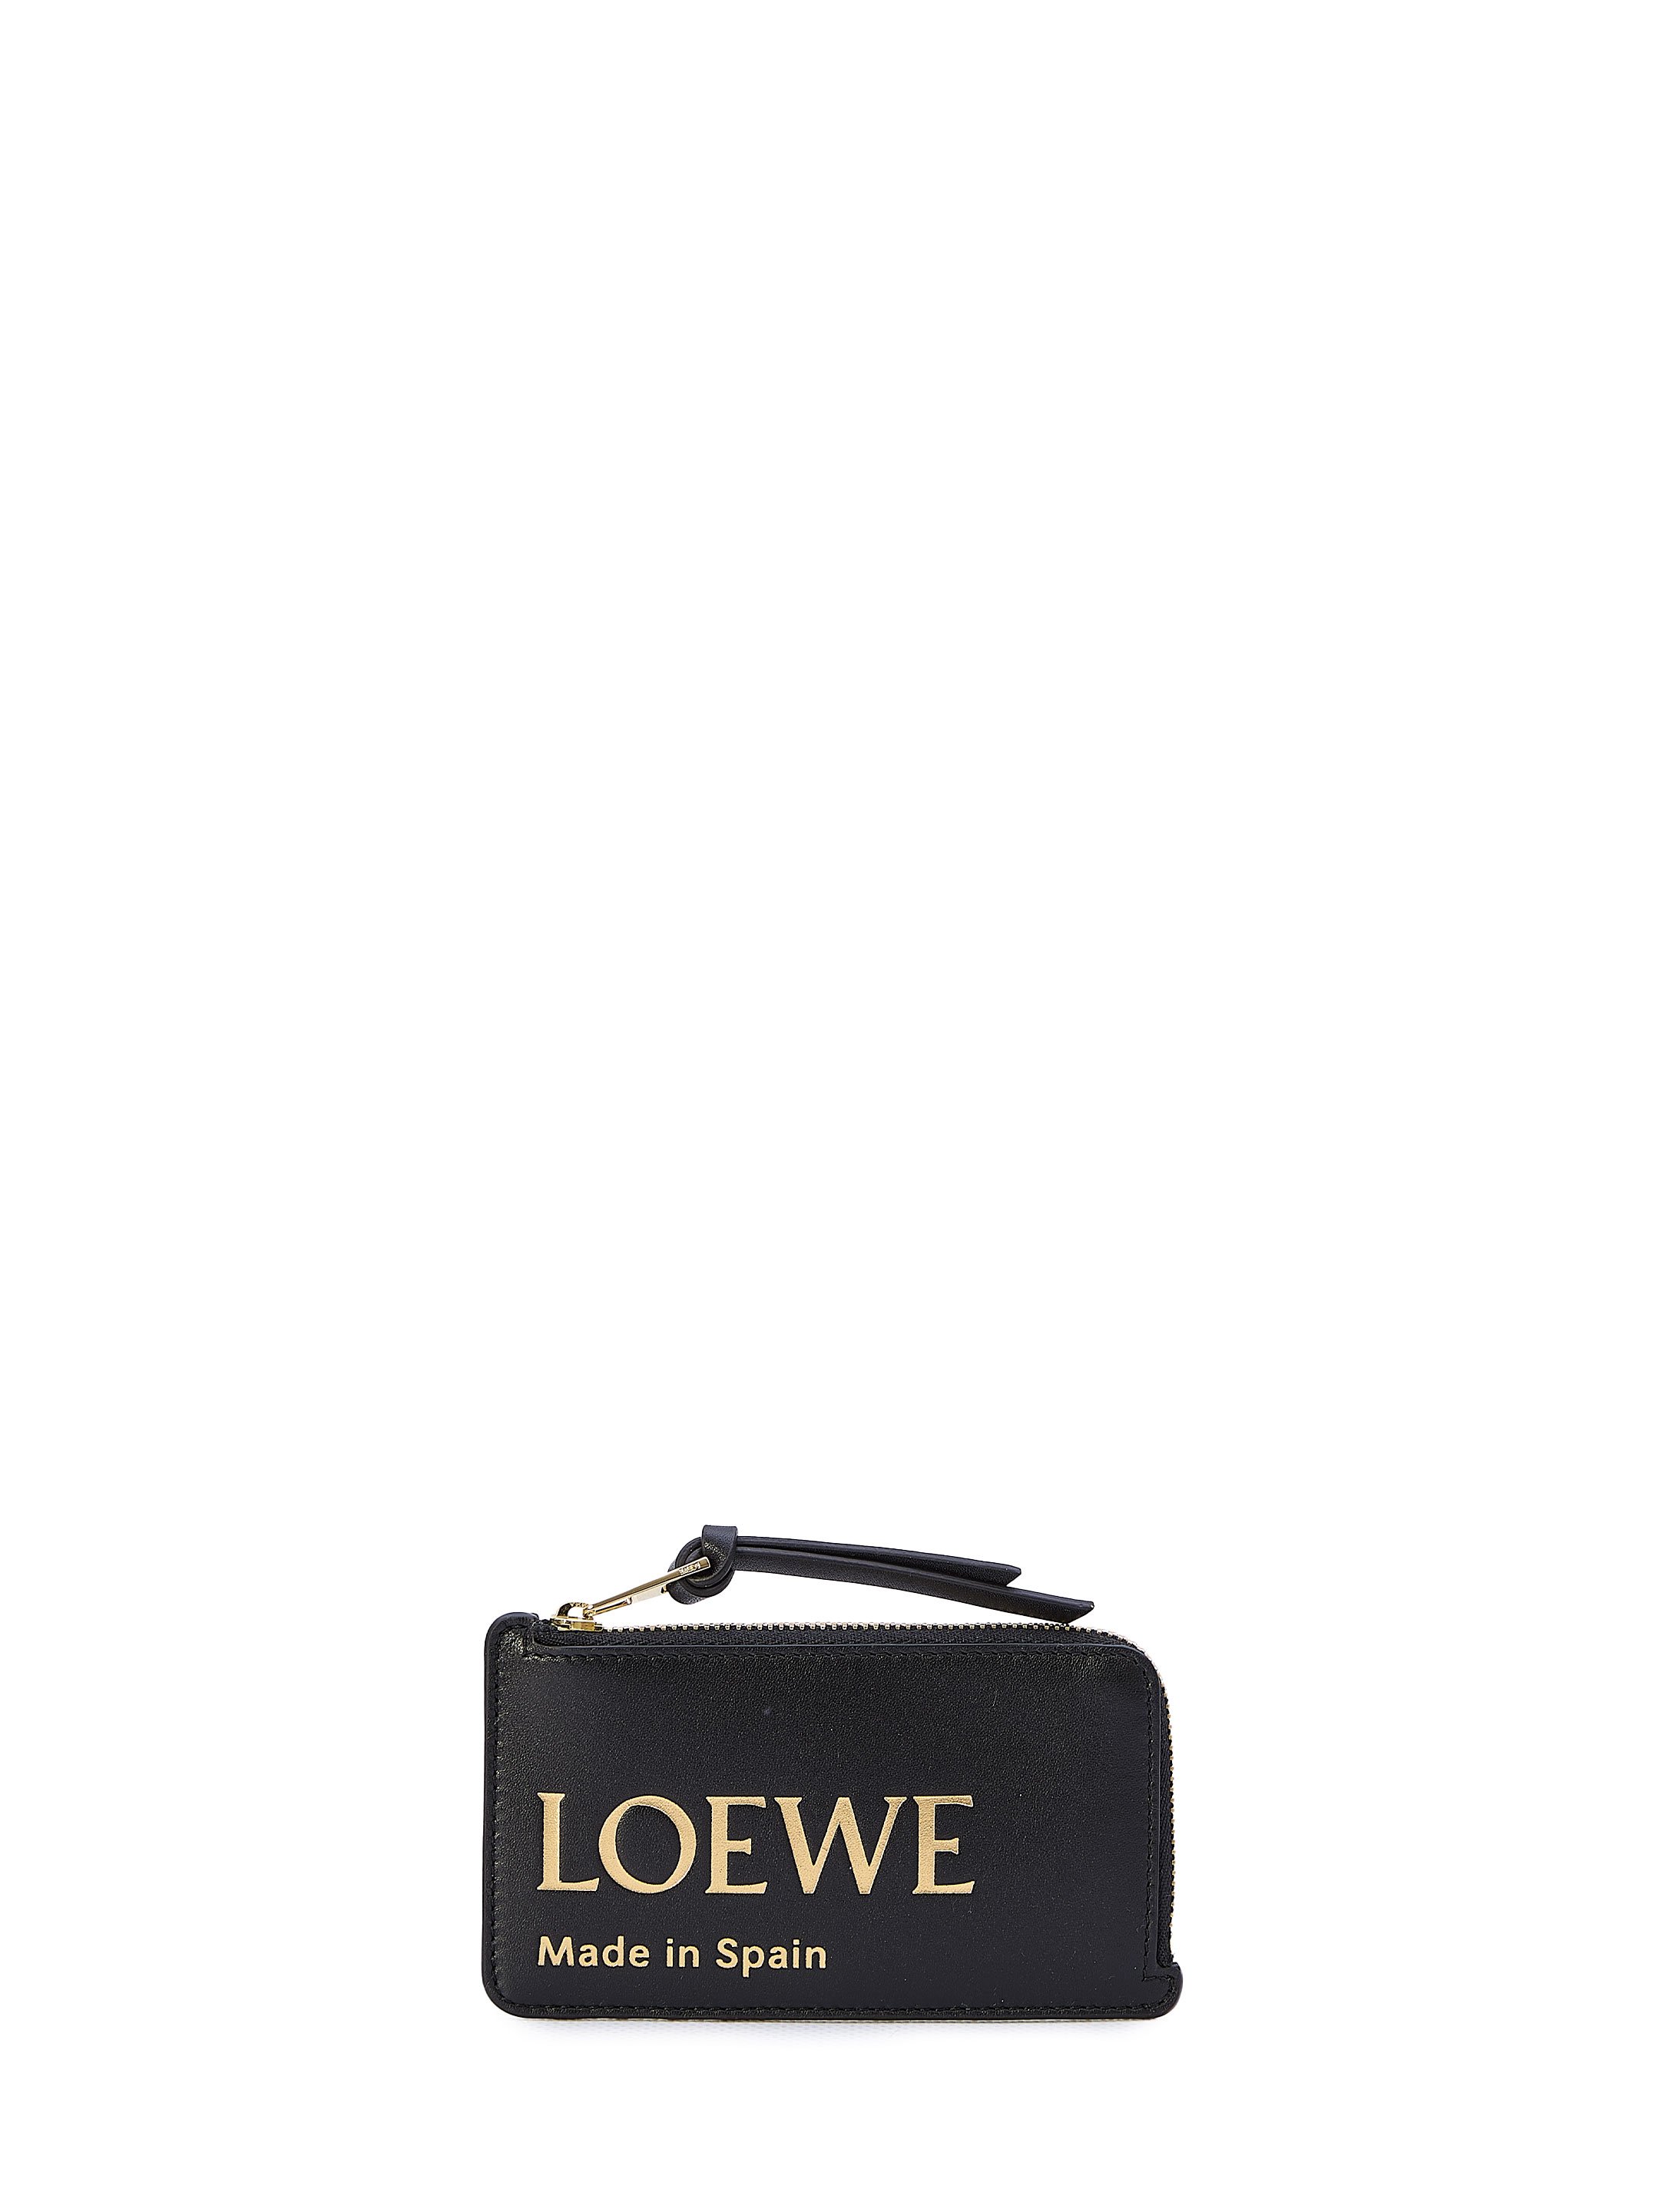 Картхолдер Loewe Loewe, черный